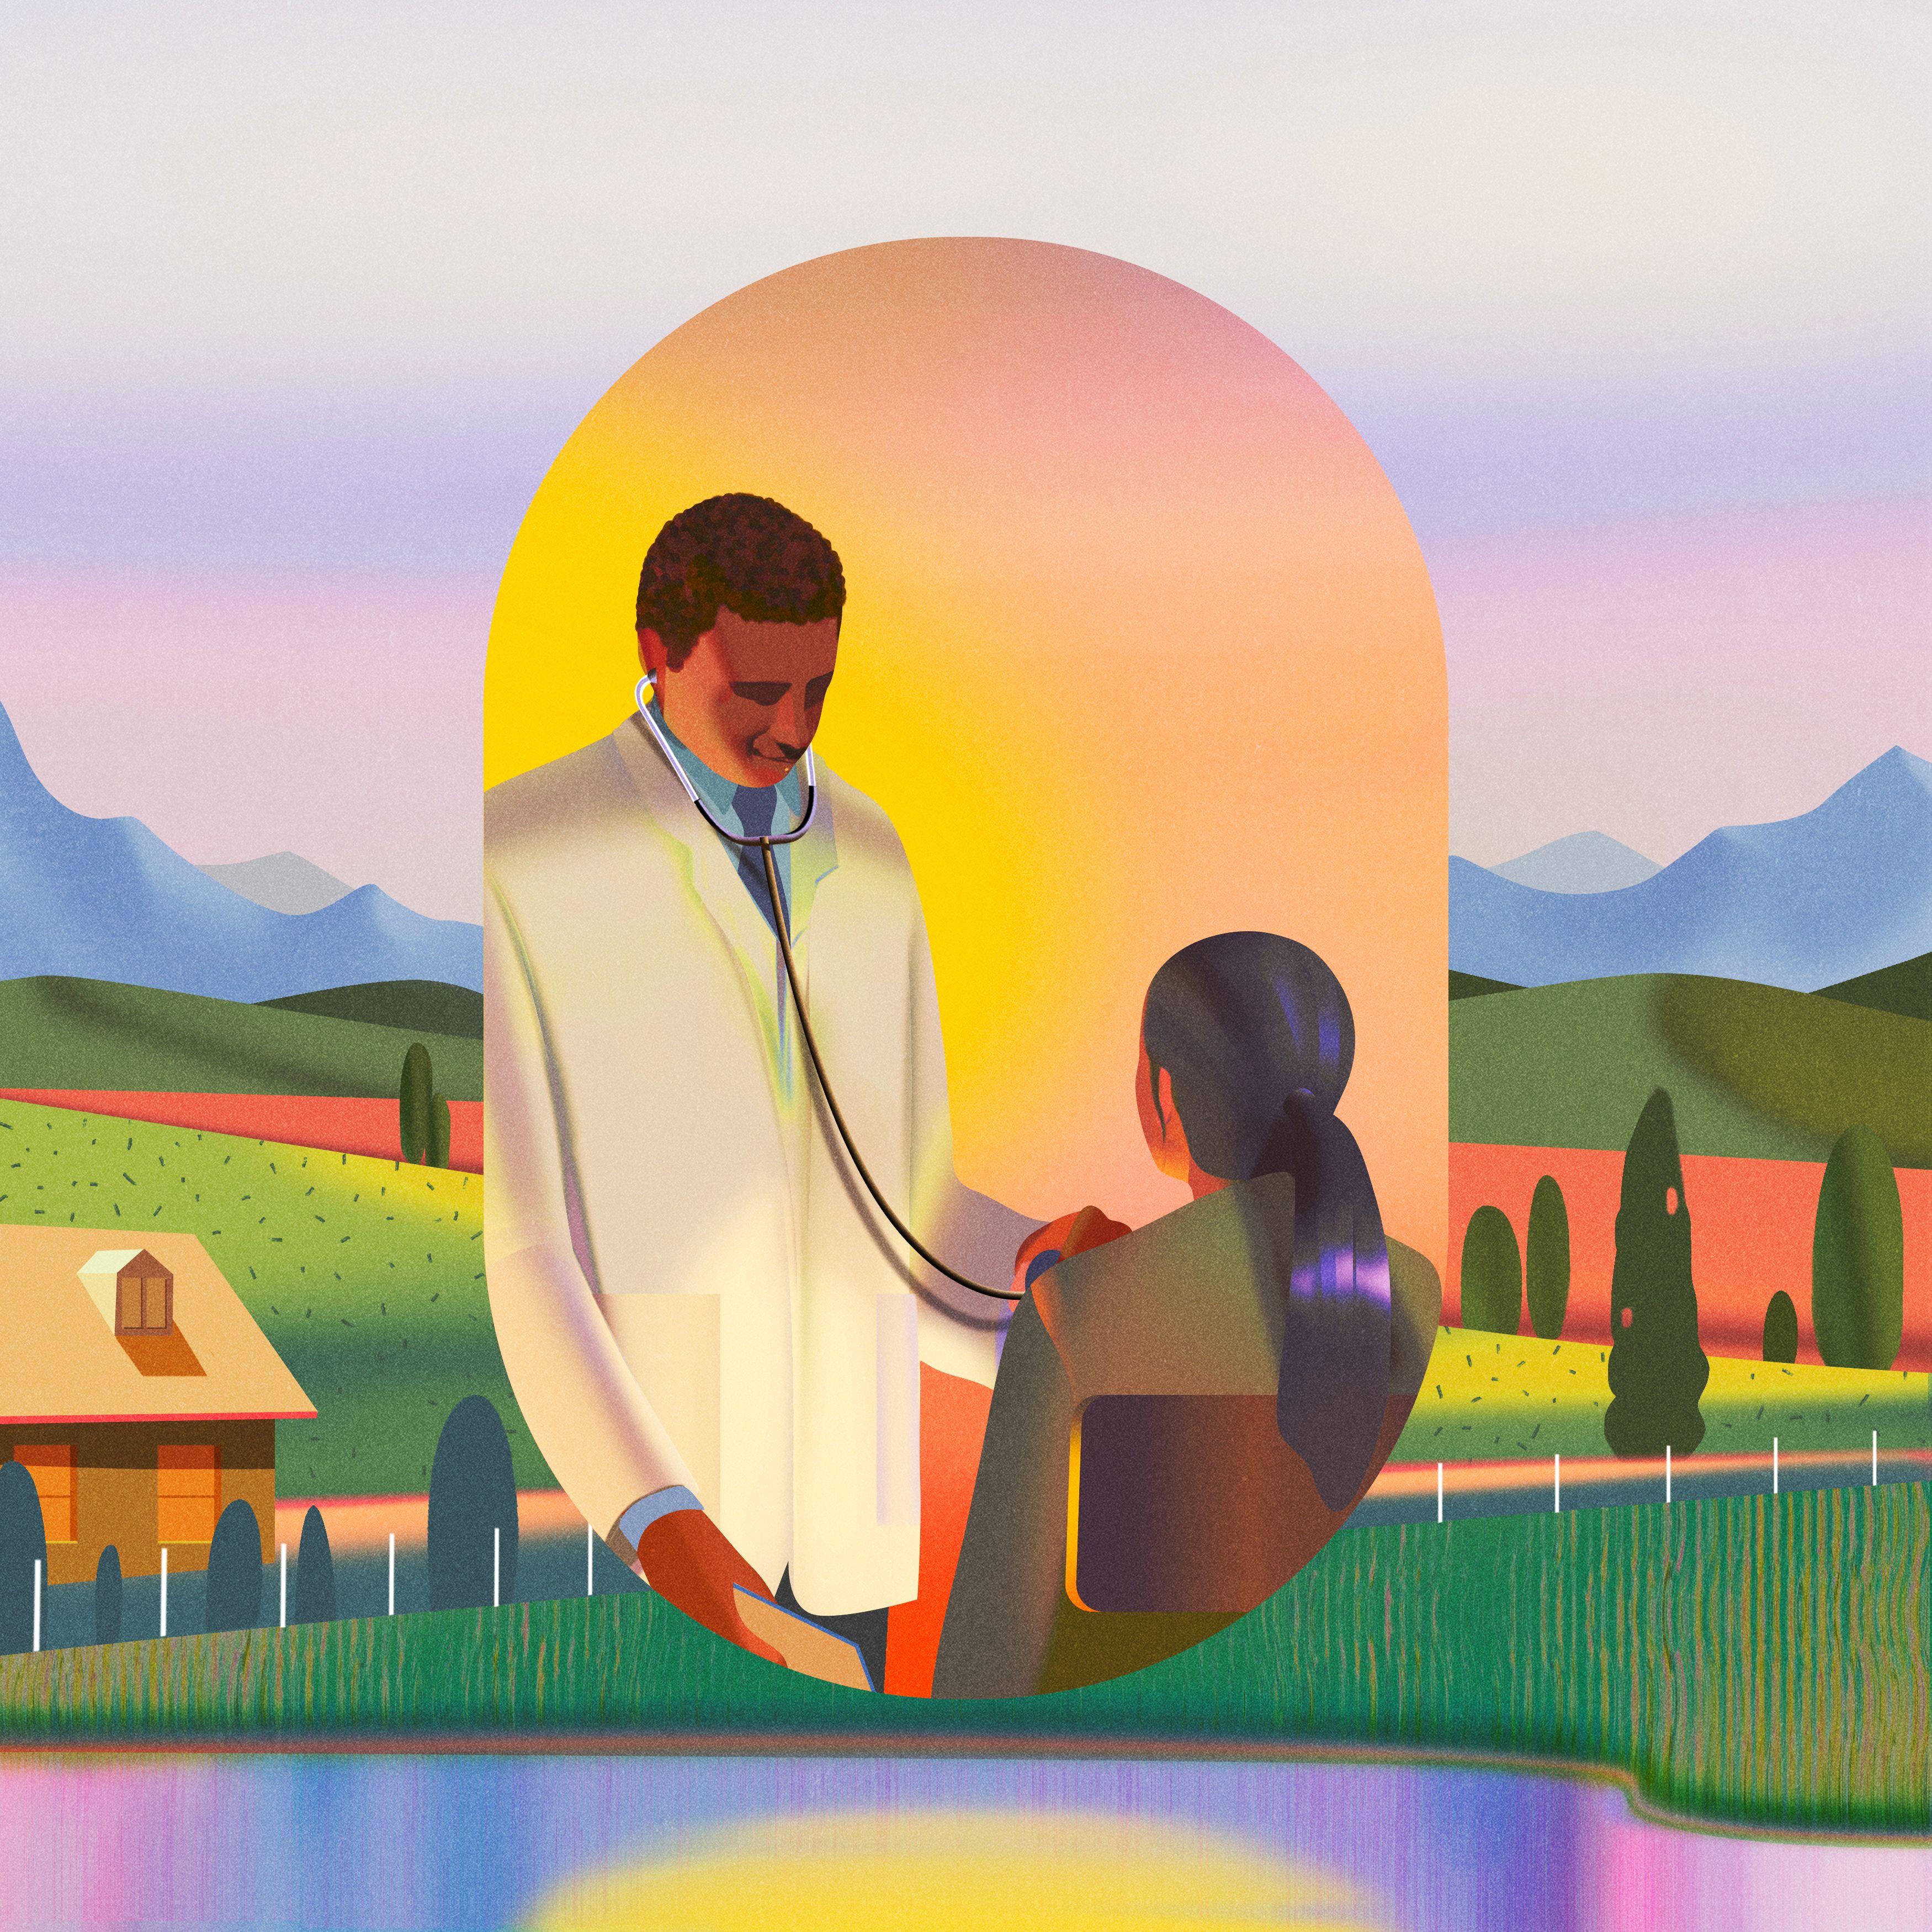 Illustration of a doctor visit in rural America 